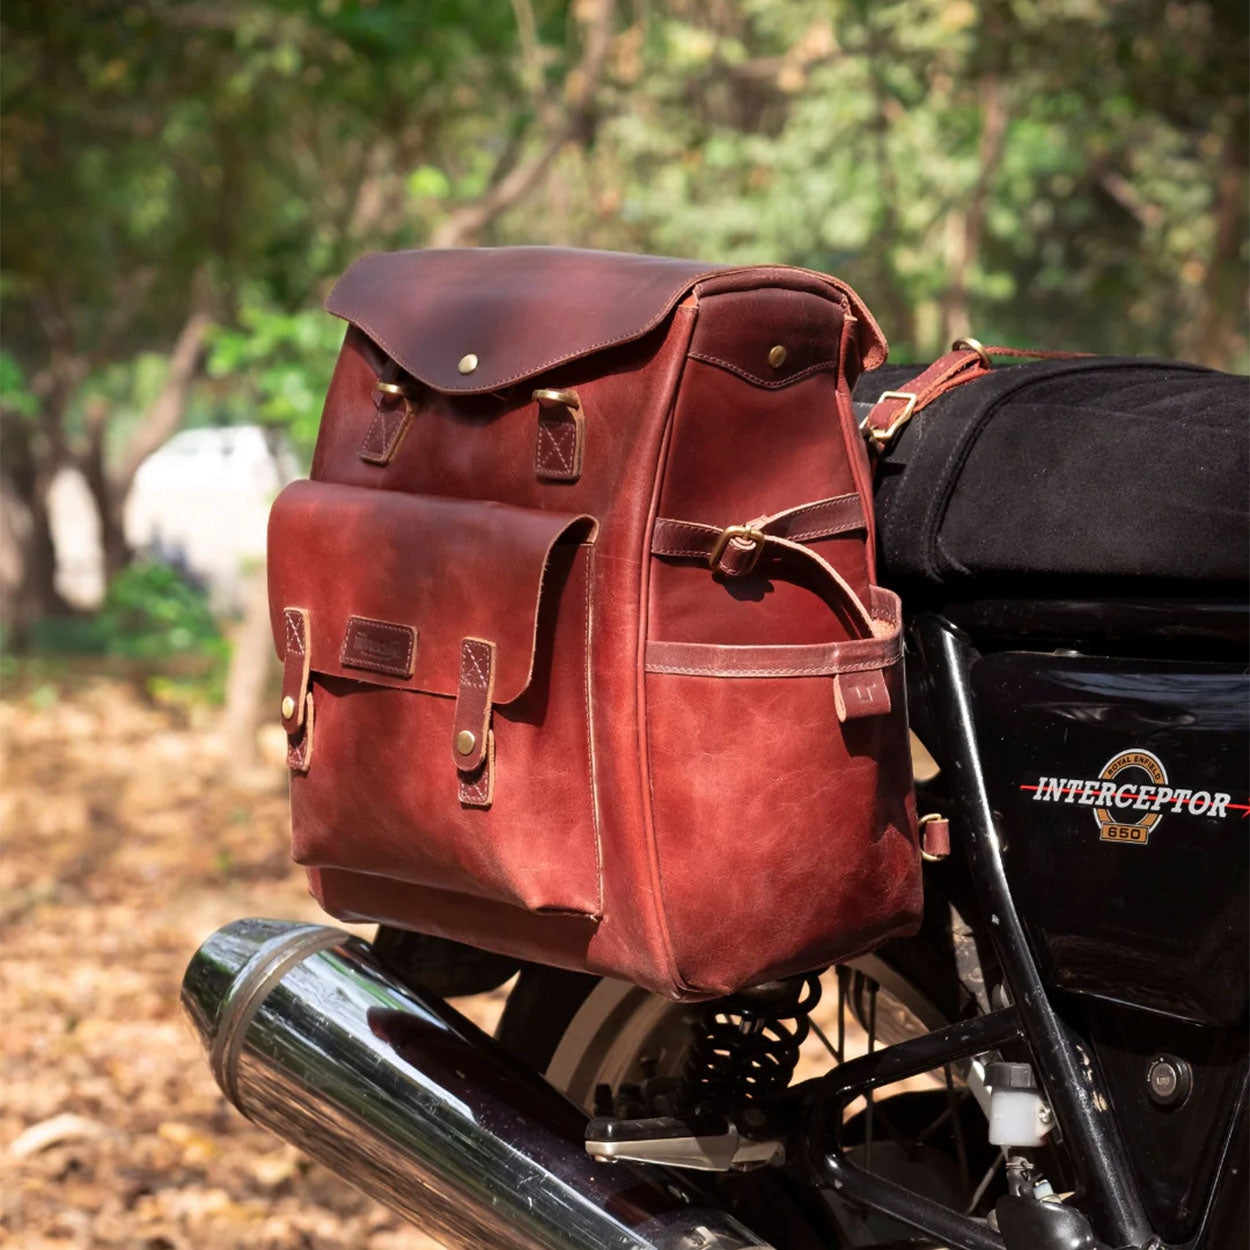 Trip Machine saddle bag Outlander Cherry